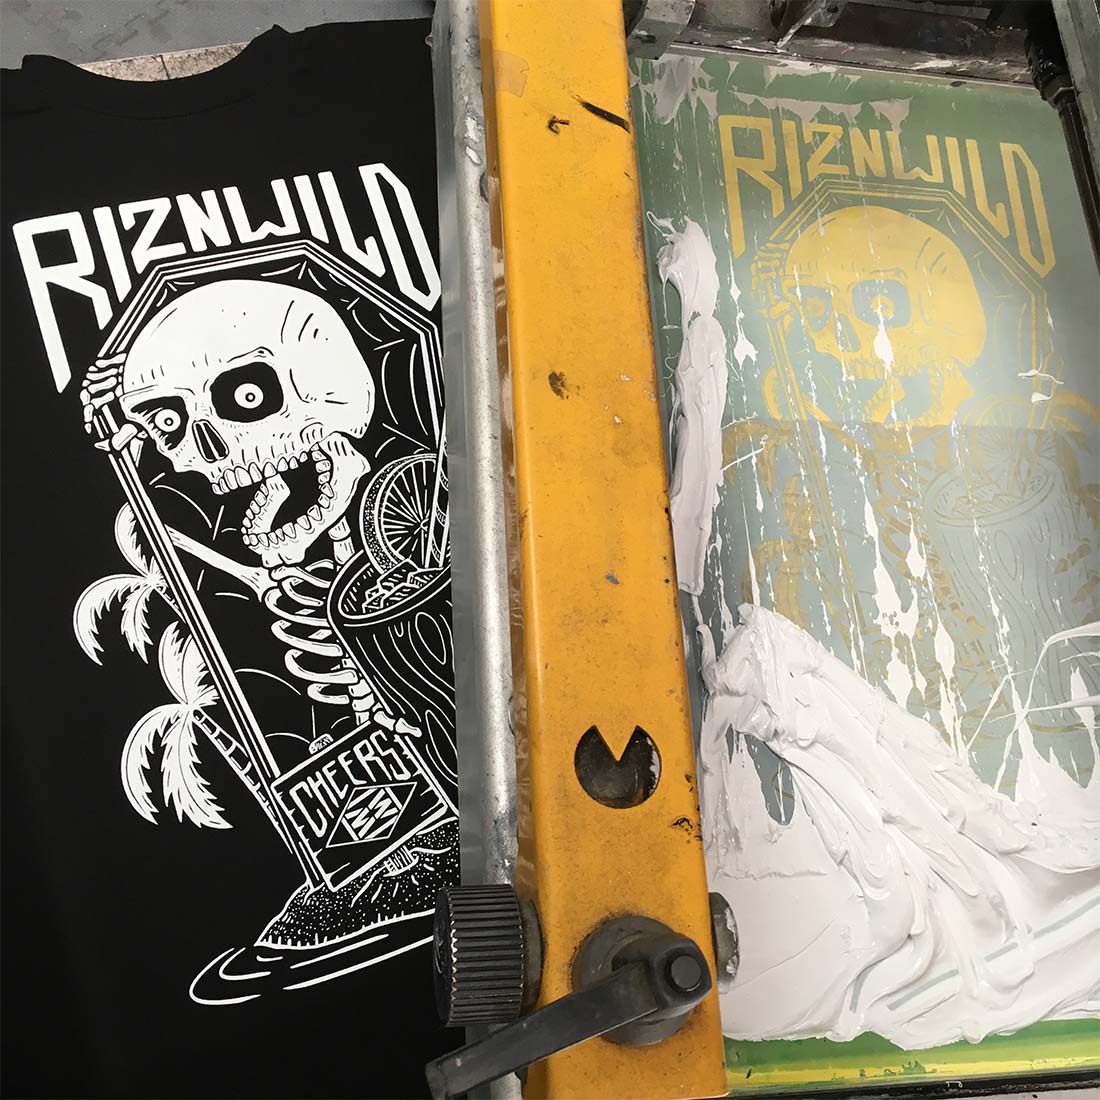 RIZNWILD skeleton cove men's t-shirt